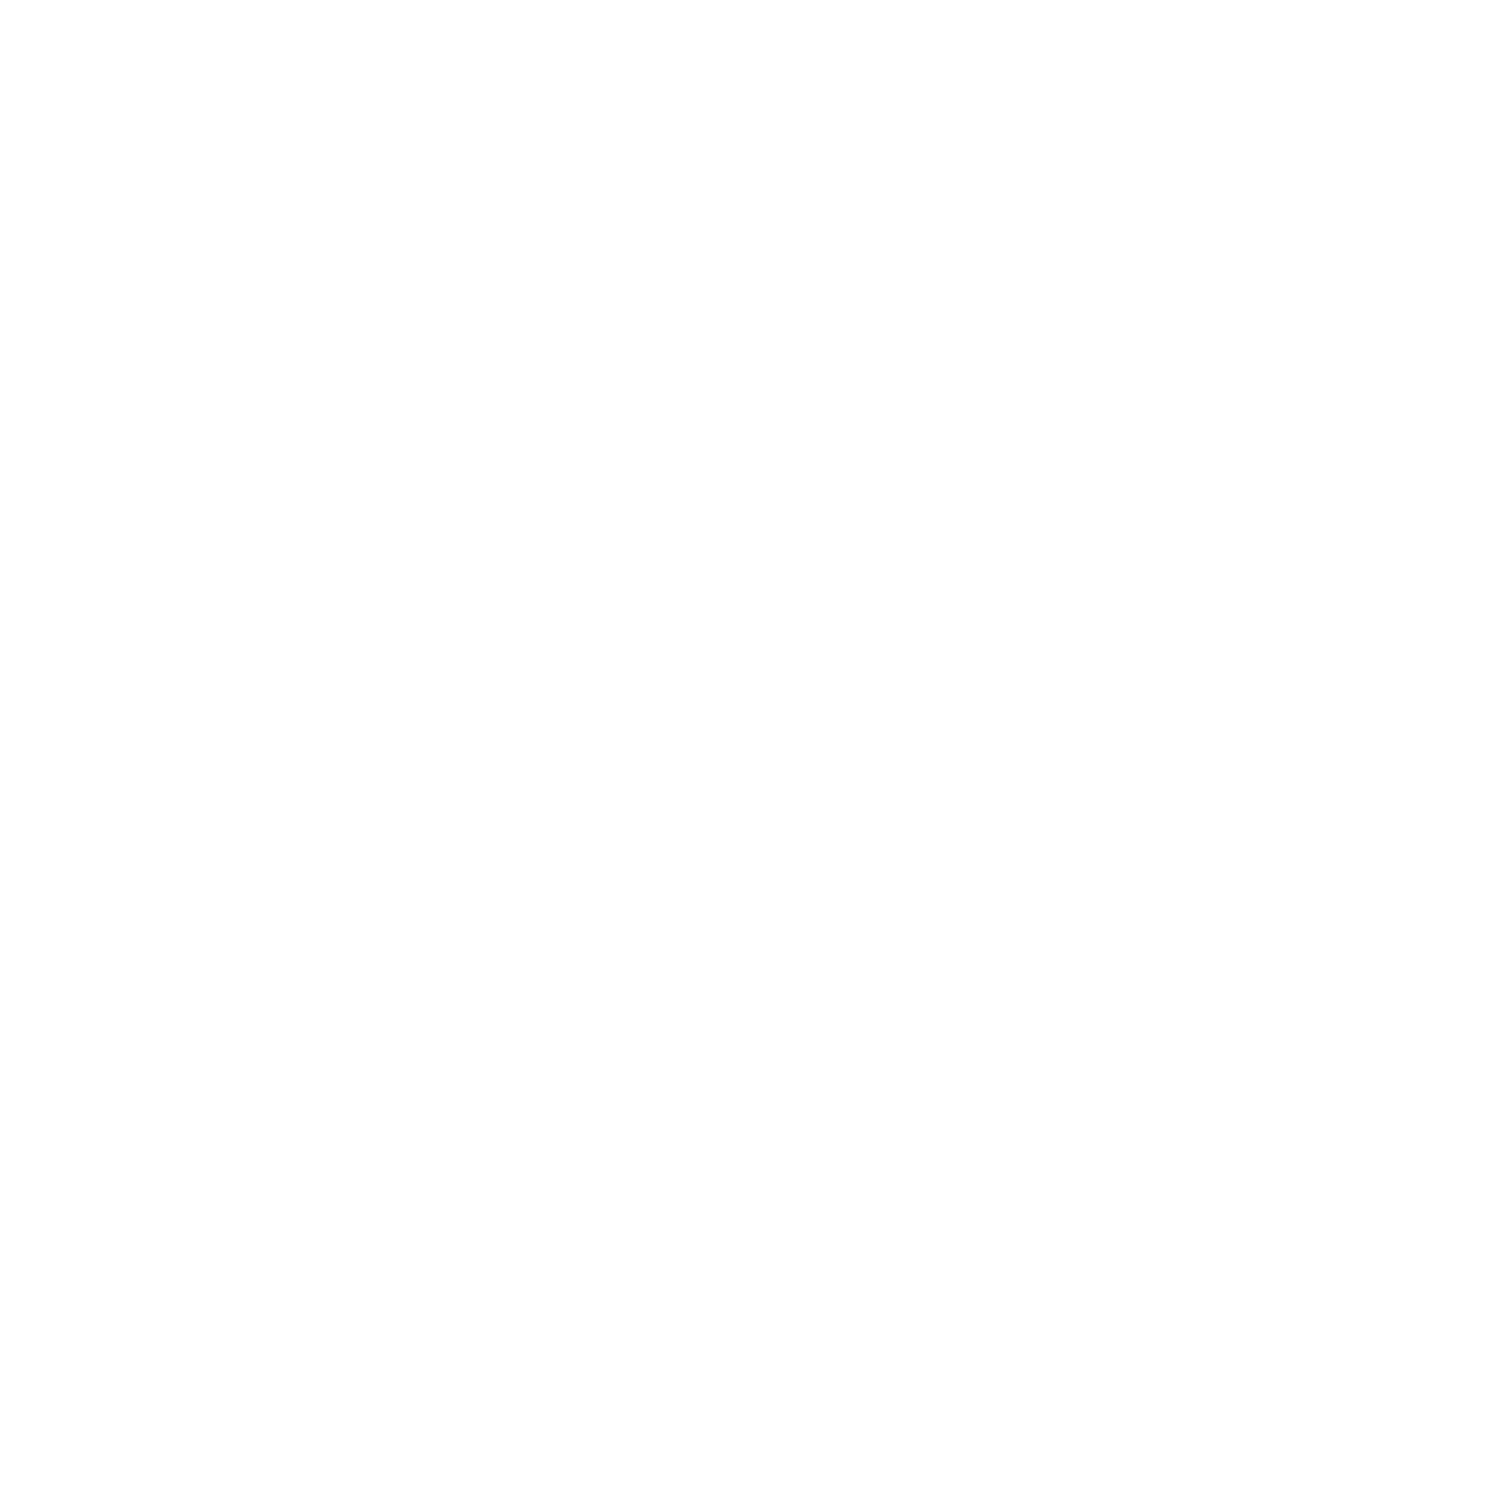 Spyder | Apple Arcade